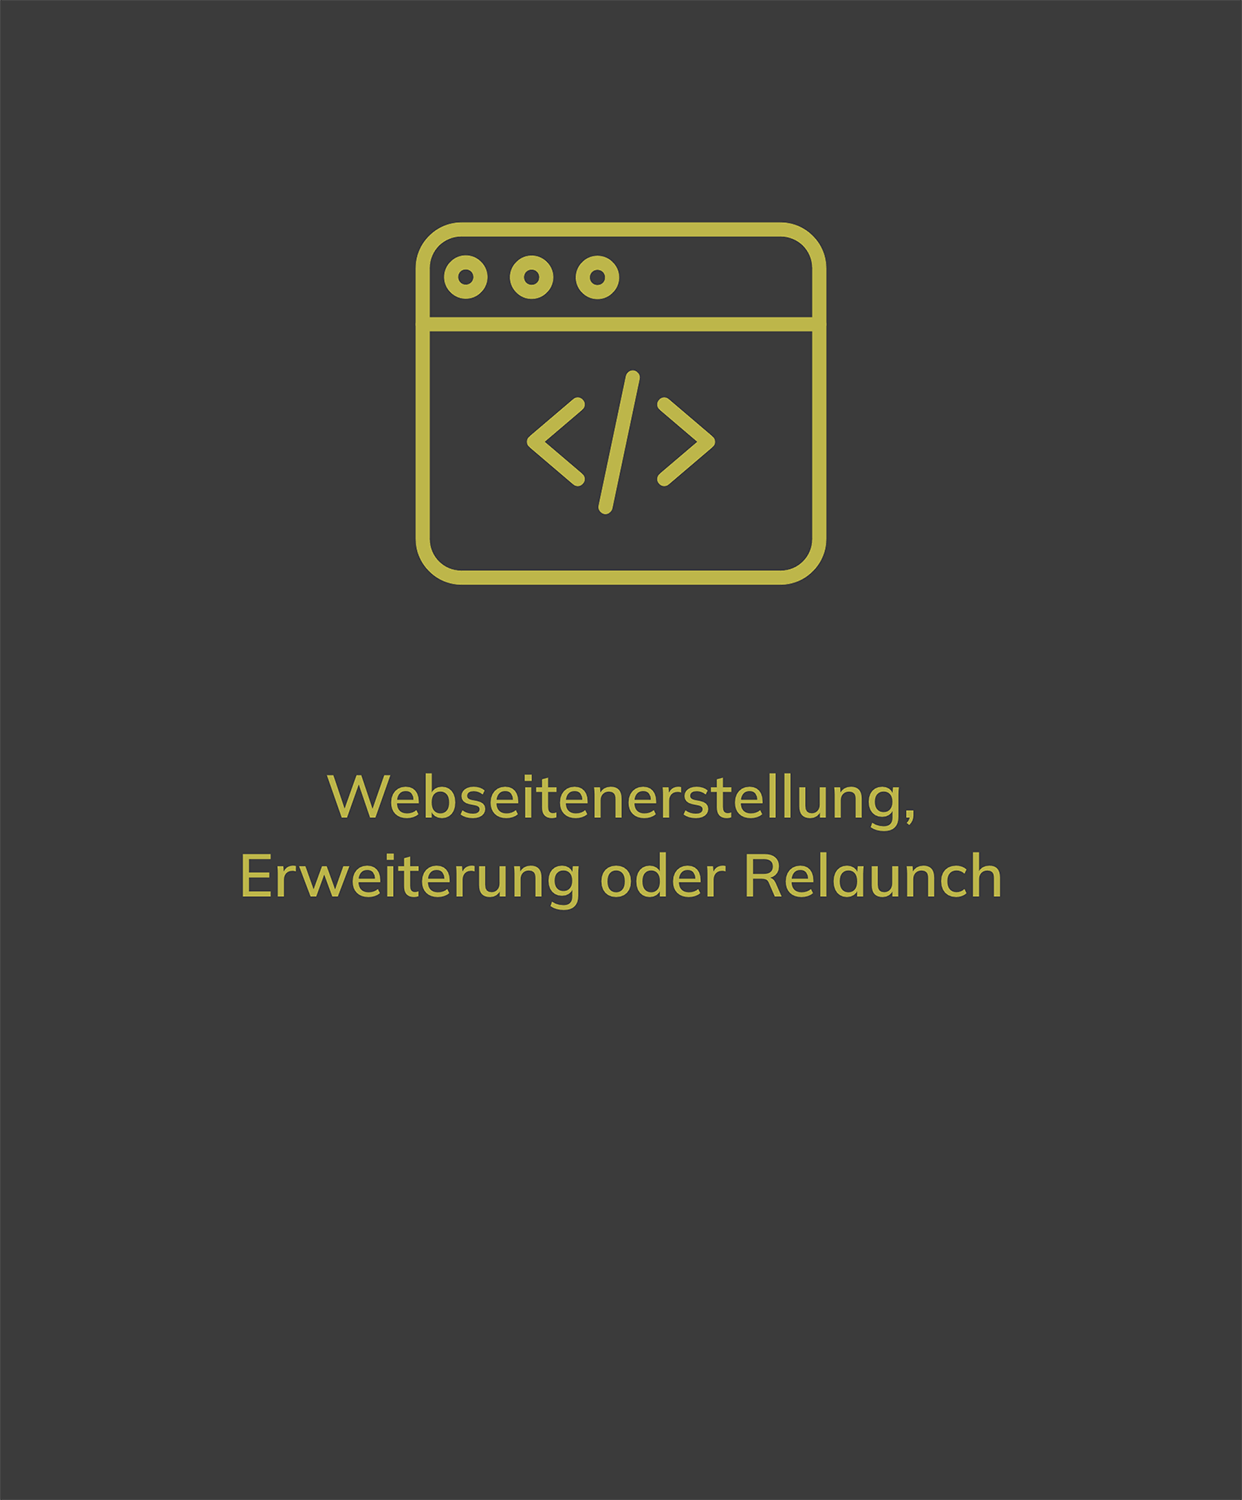 Webseitenerstellung, Erweiterung oder Relaunch - Wordpress Agentur Osnabrück